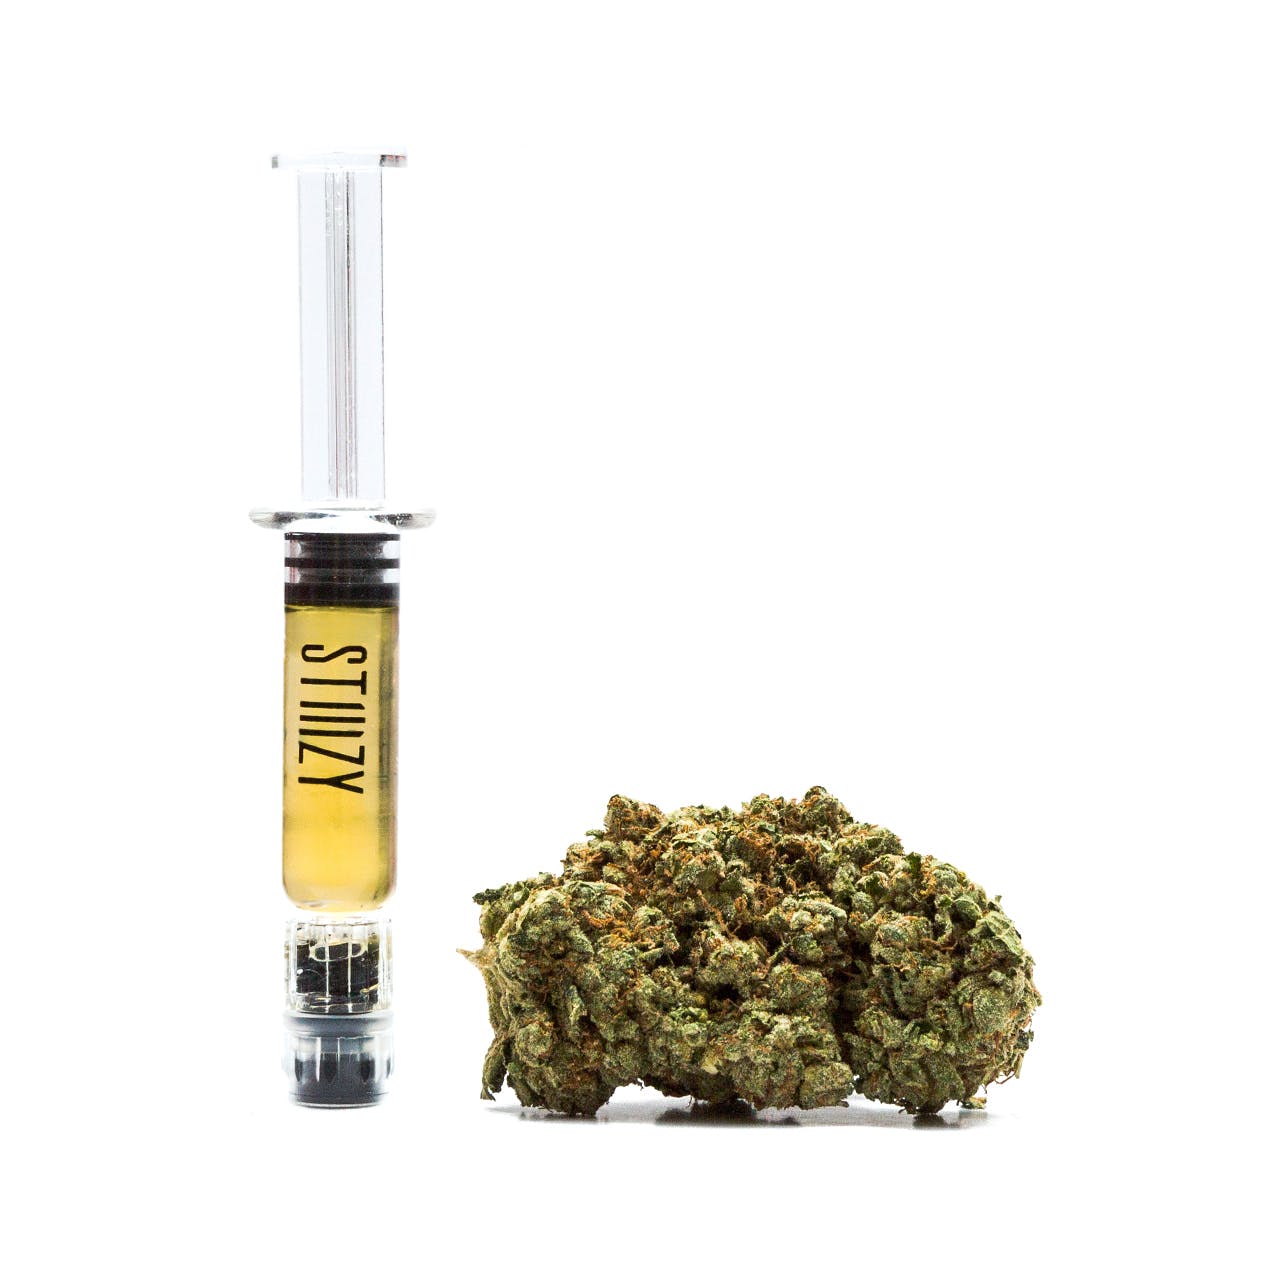 marijuana-dispensaries-gold-20-cap-collective-in-los-angeles-hardcore-og-syringe